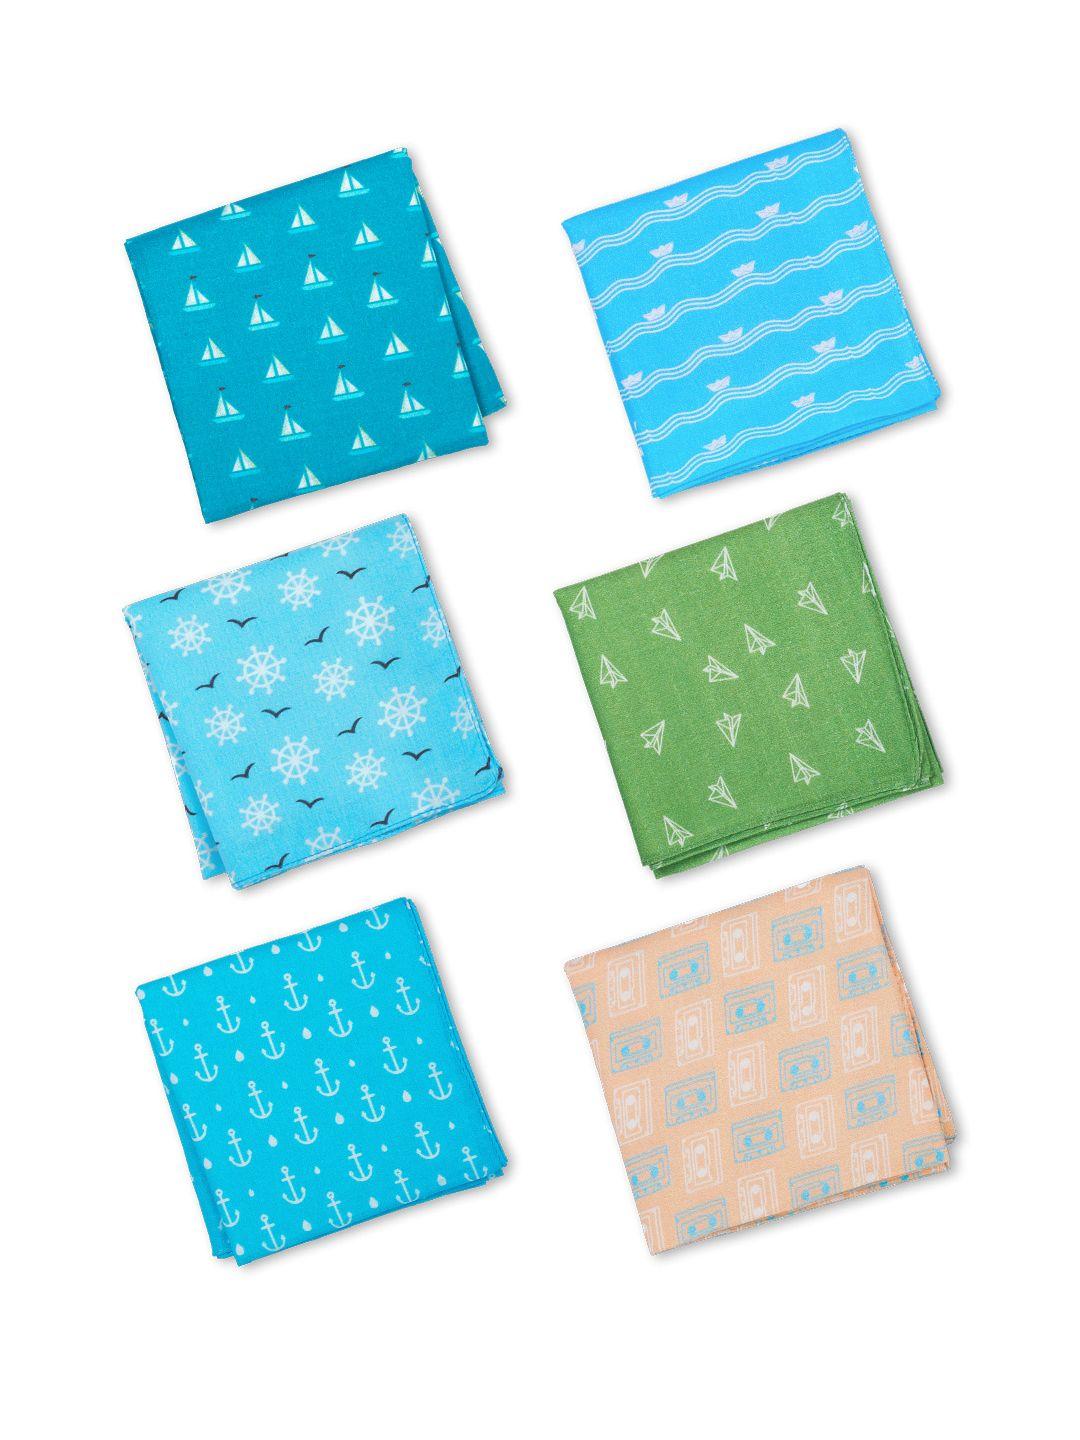 hexafun men pack of 6 printed pure organic cotton handkerchief